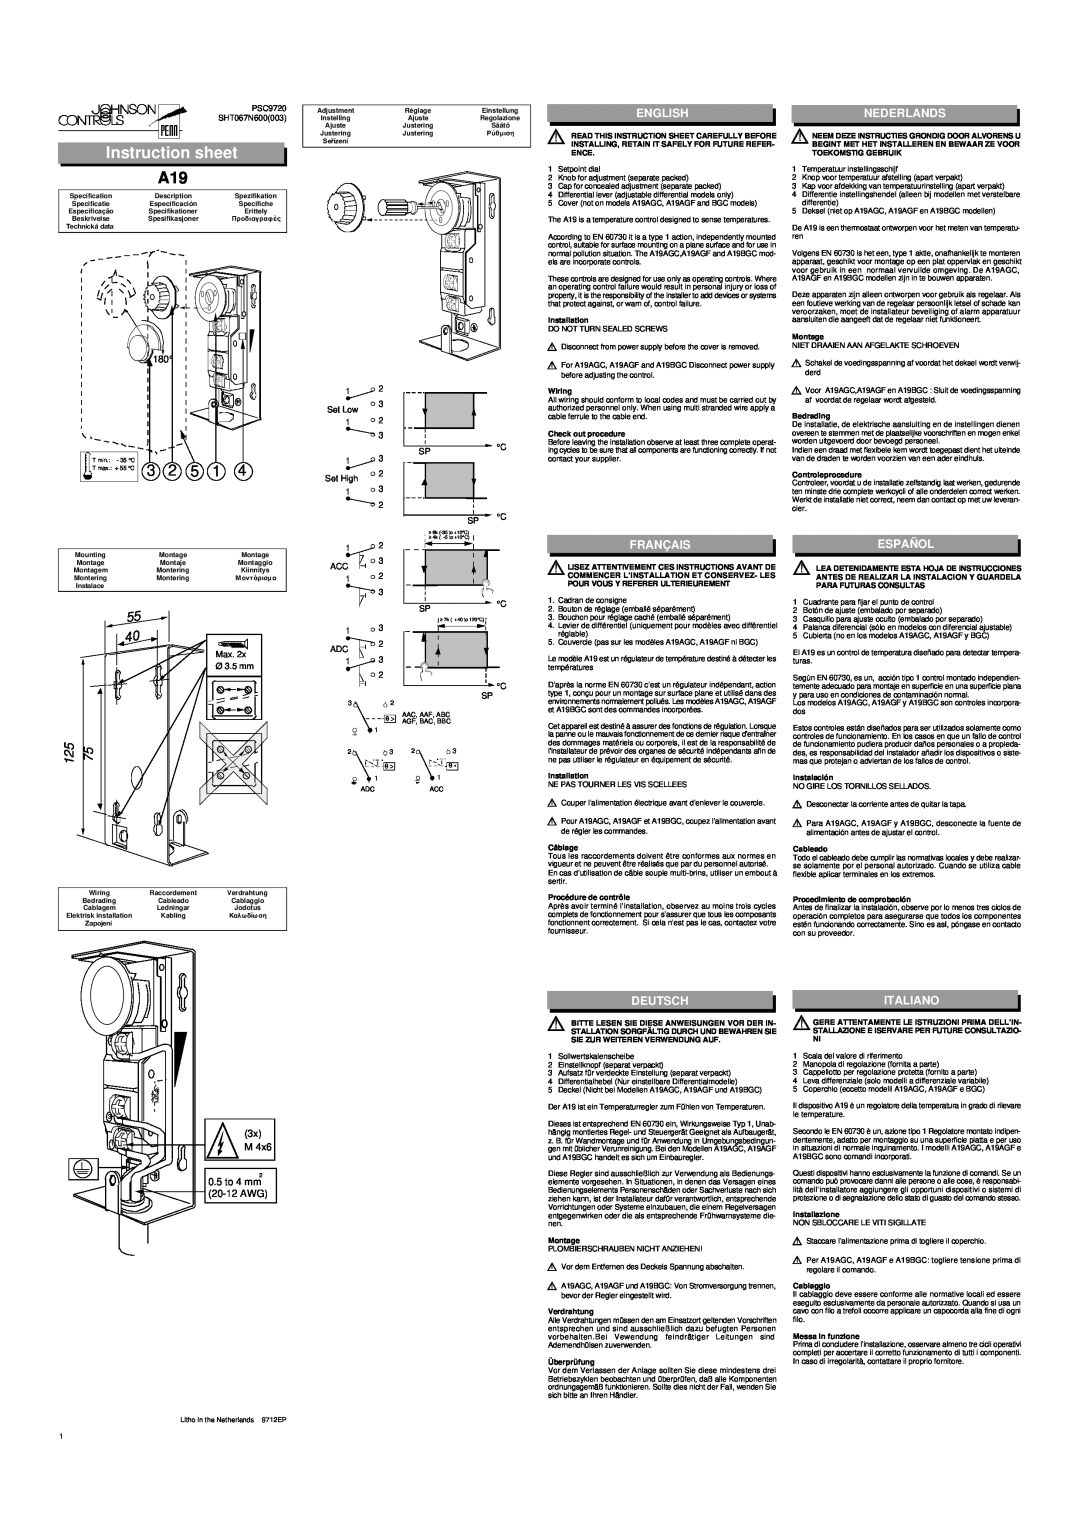 Johnson Controls A19D, A19B, A19A manual Instruction sheet, English, Nederlands, Français, Español, Deutsch, Italiano, 3x M 